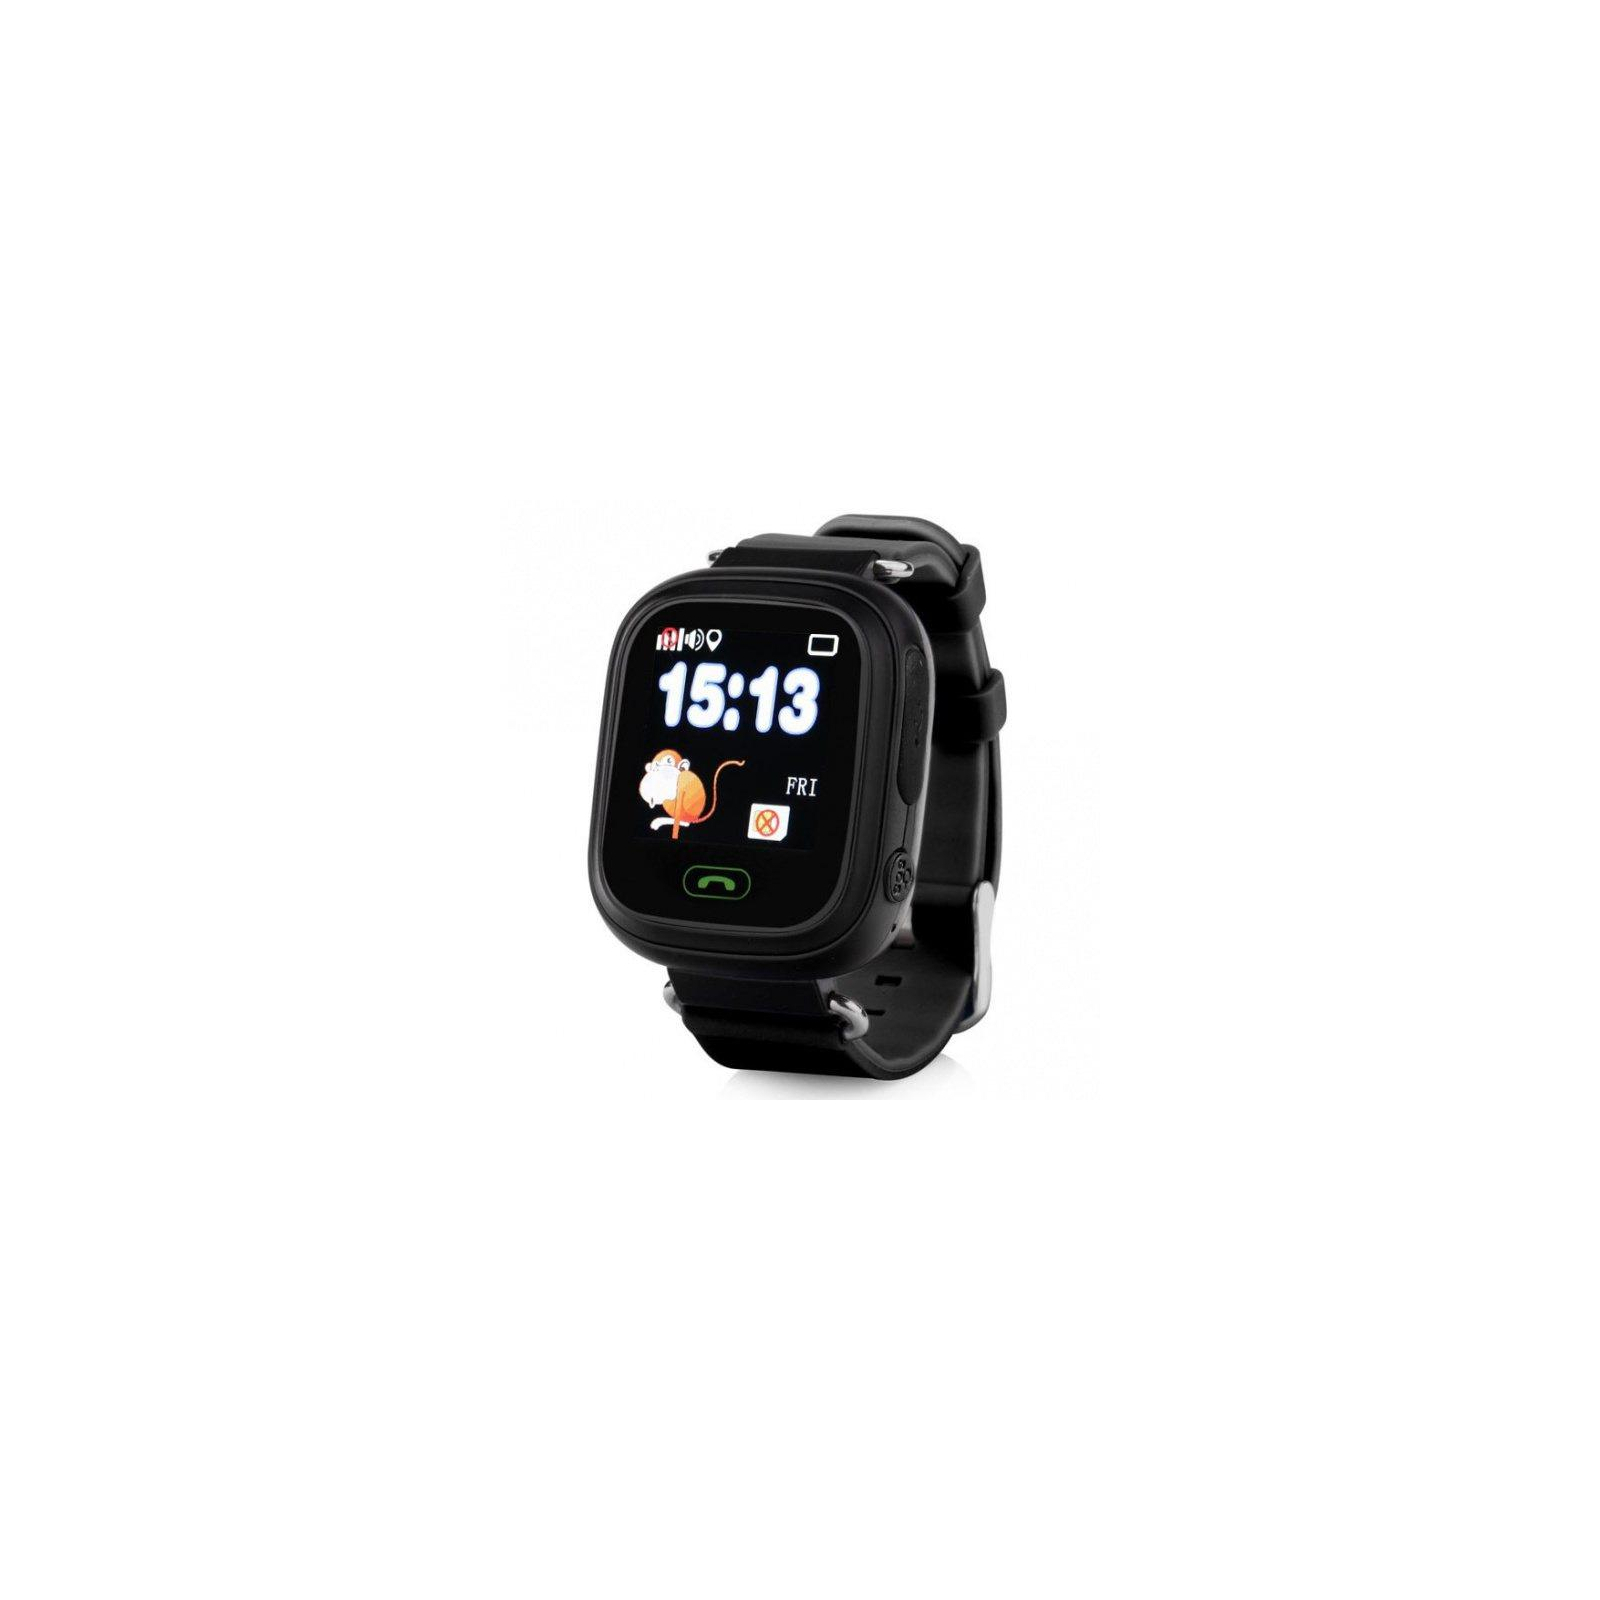 Смарт-часы UWatch Q90 Kid smart watch Black (F_50521)